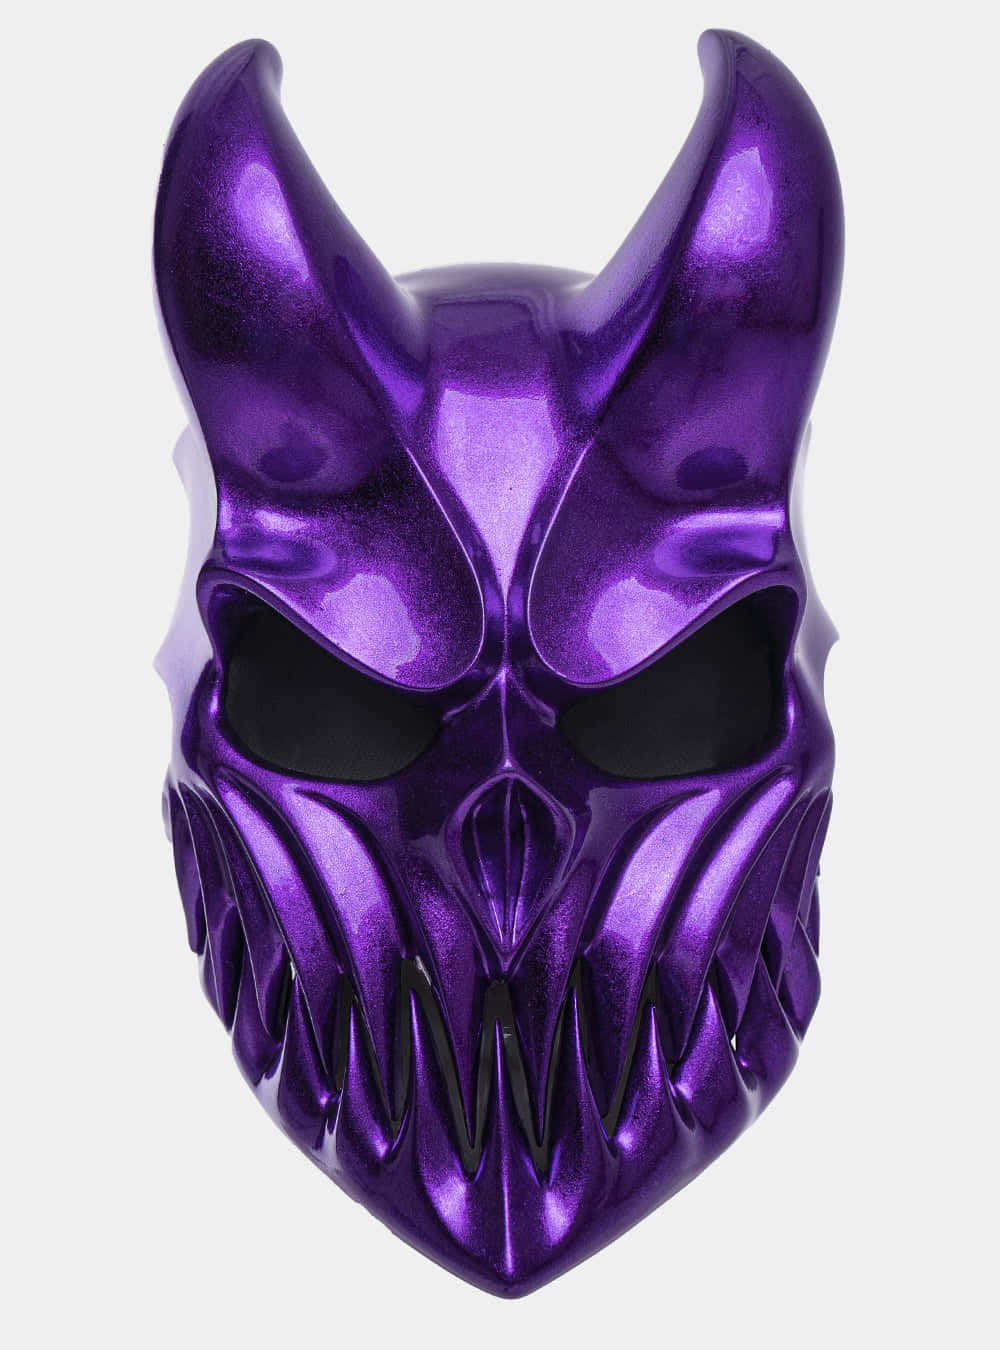 Purple Demonic Mask Image Wallpaper